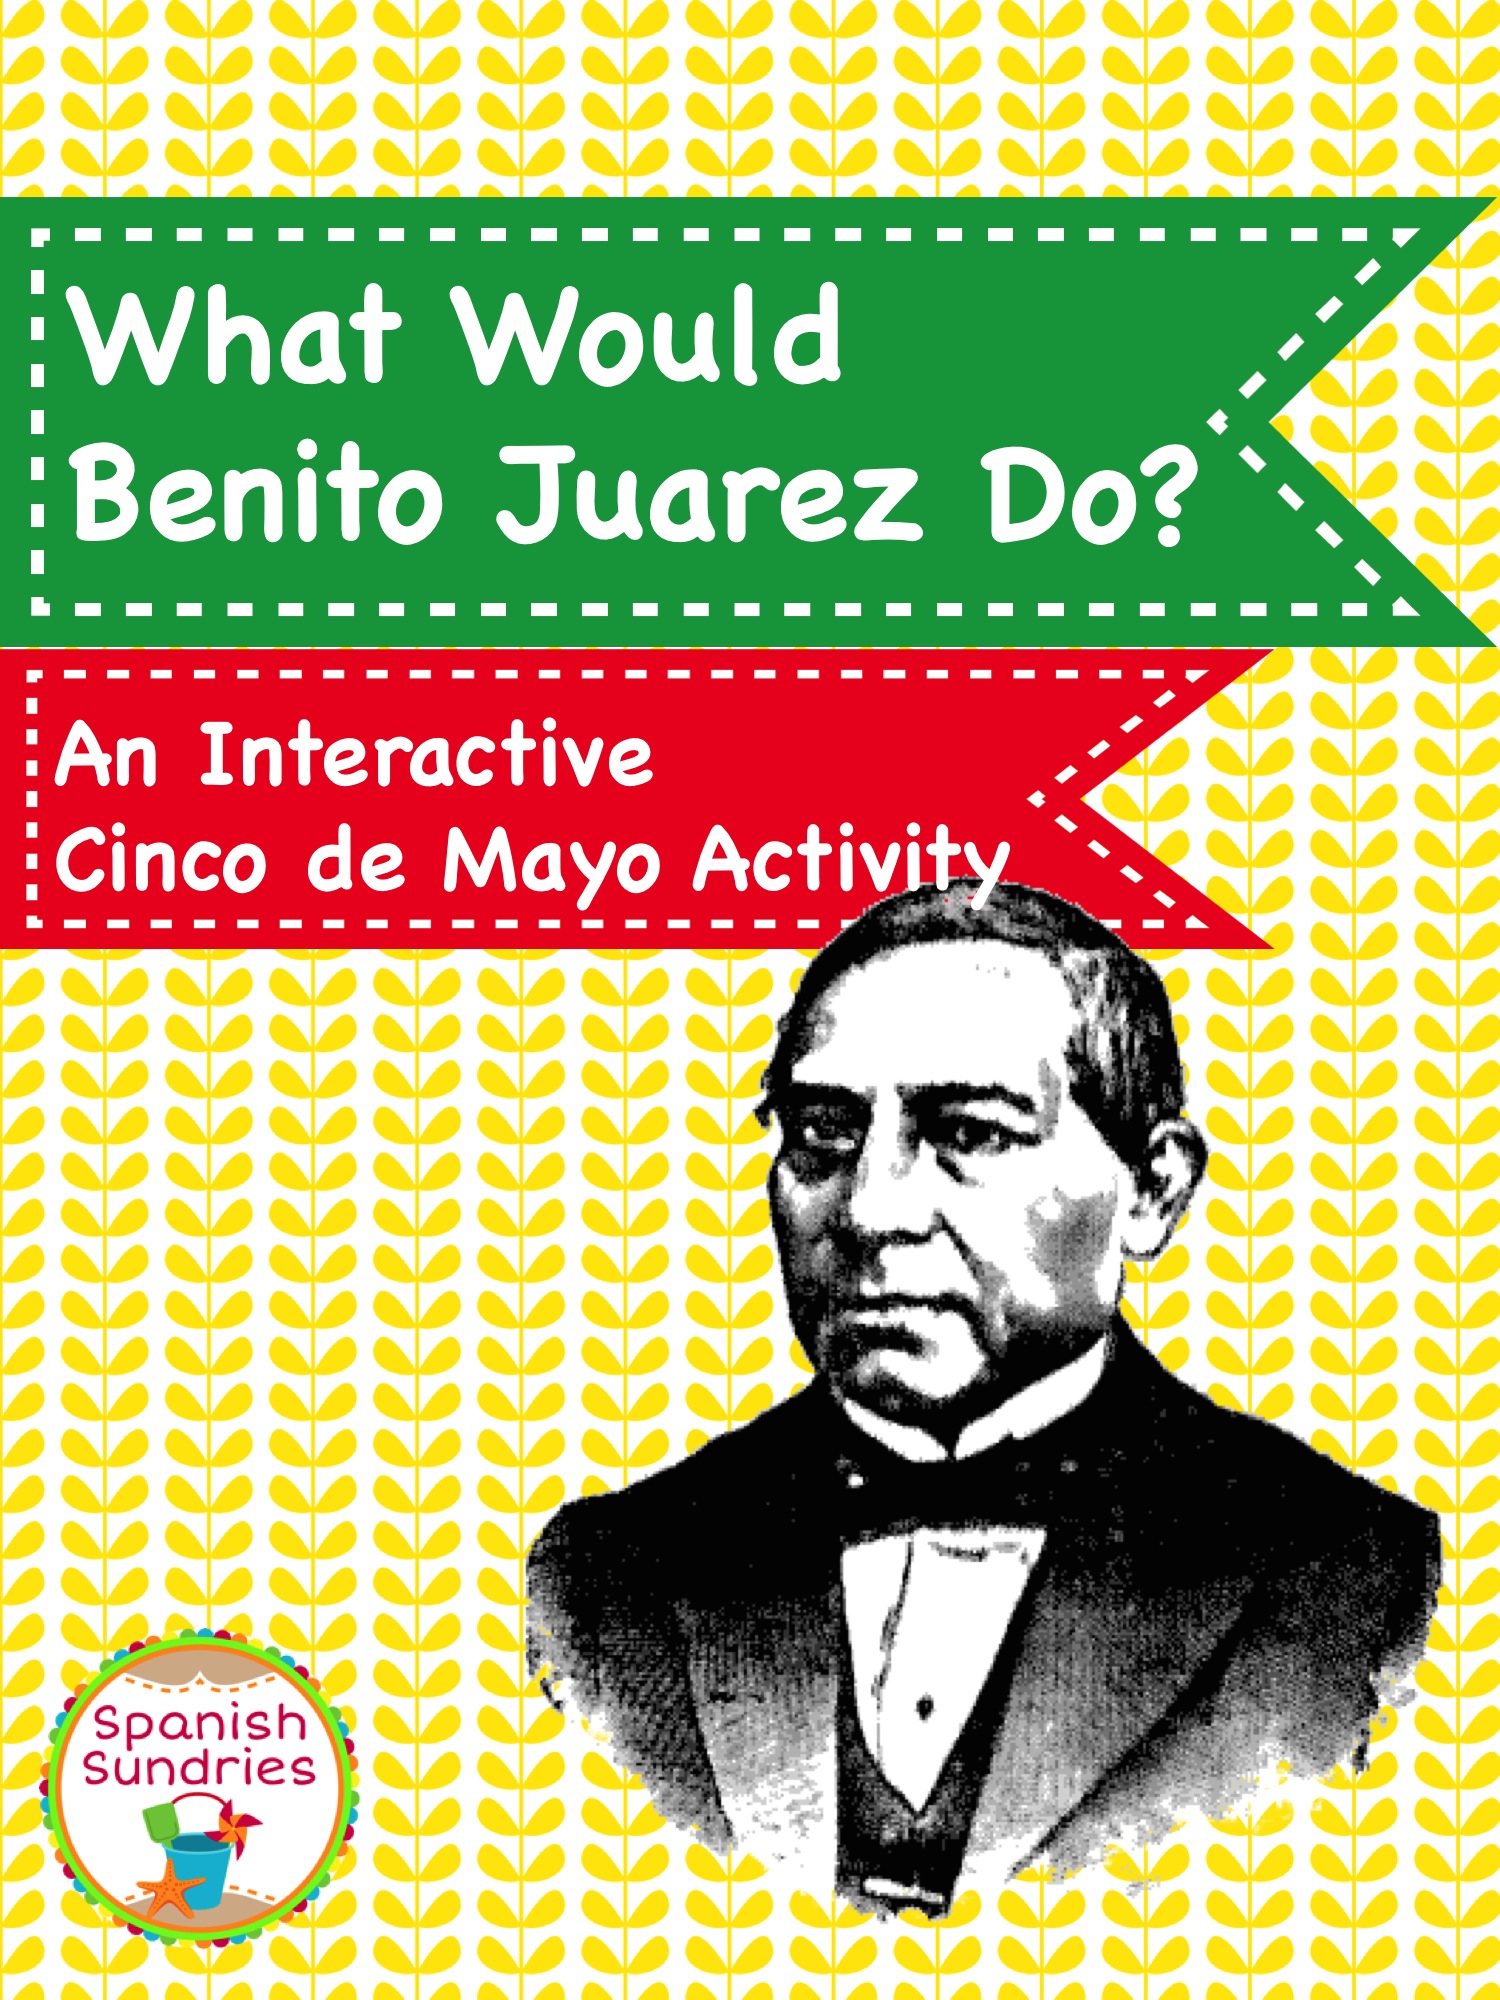 Cinco de Mayo - What Would Benito Juarez Do?